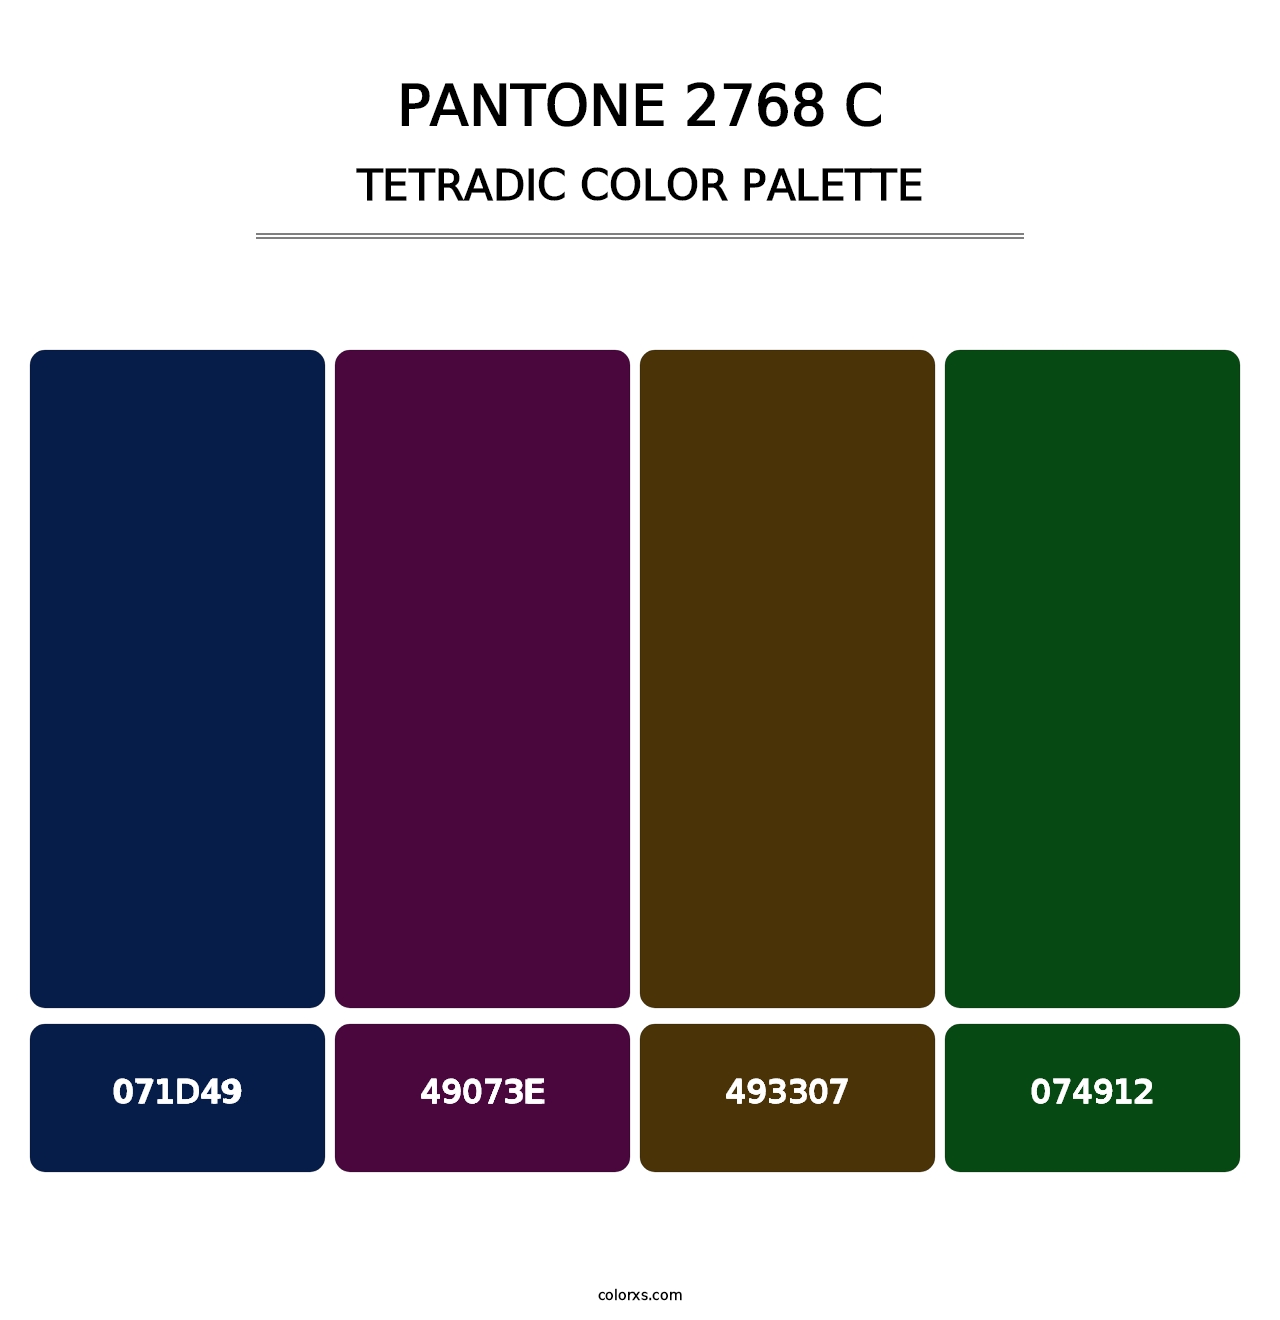 PANTONE 2768 C - Tetradic Color Palette